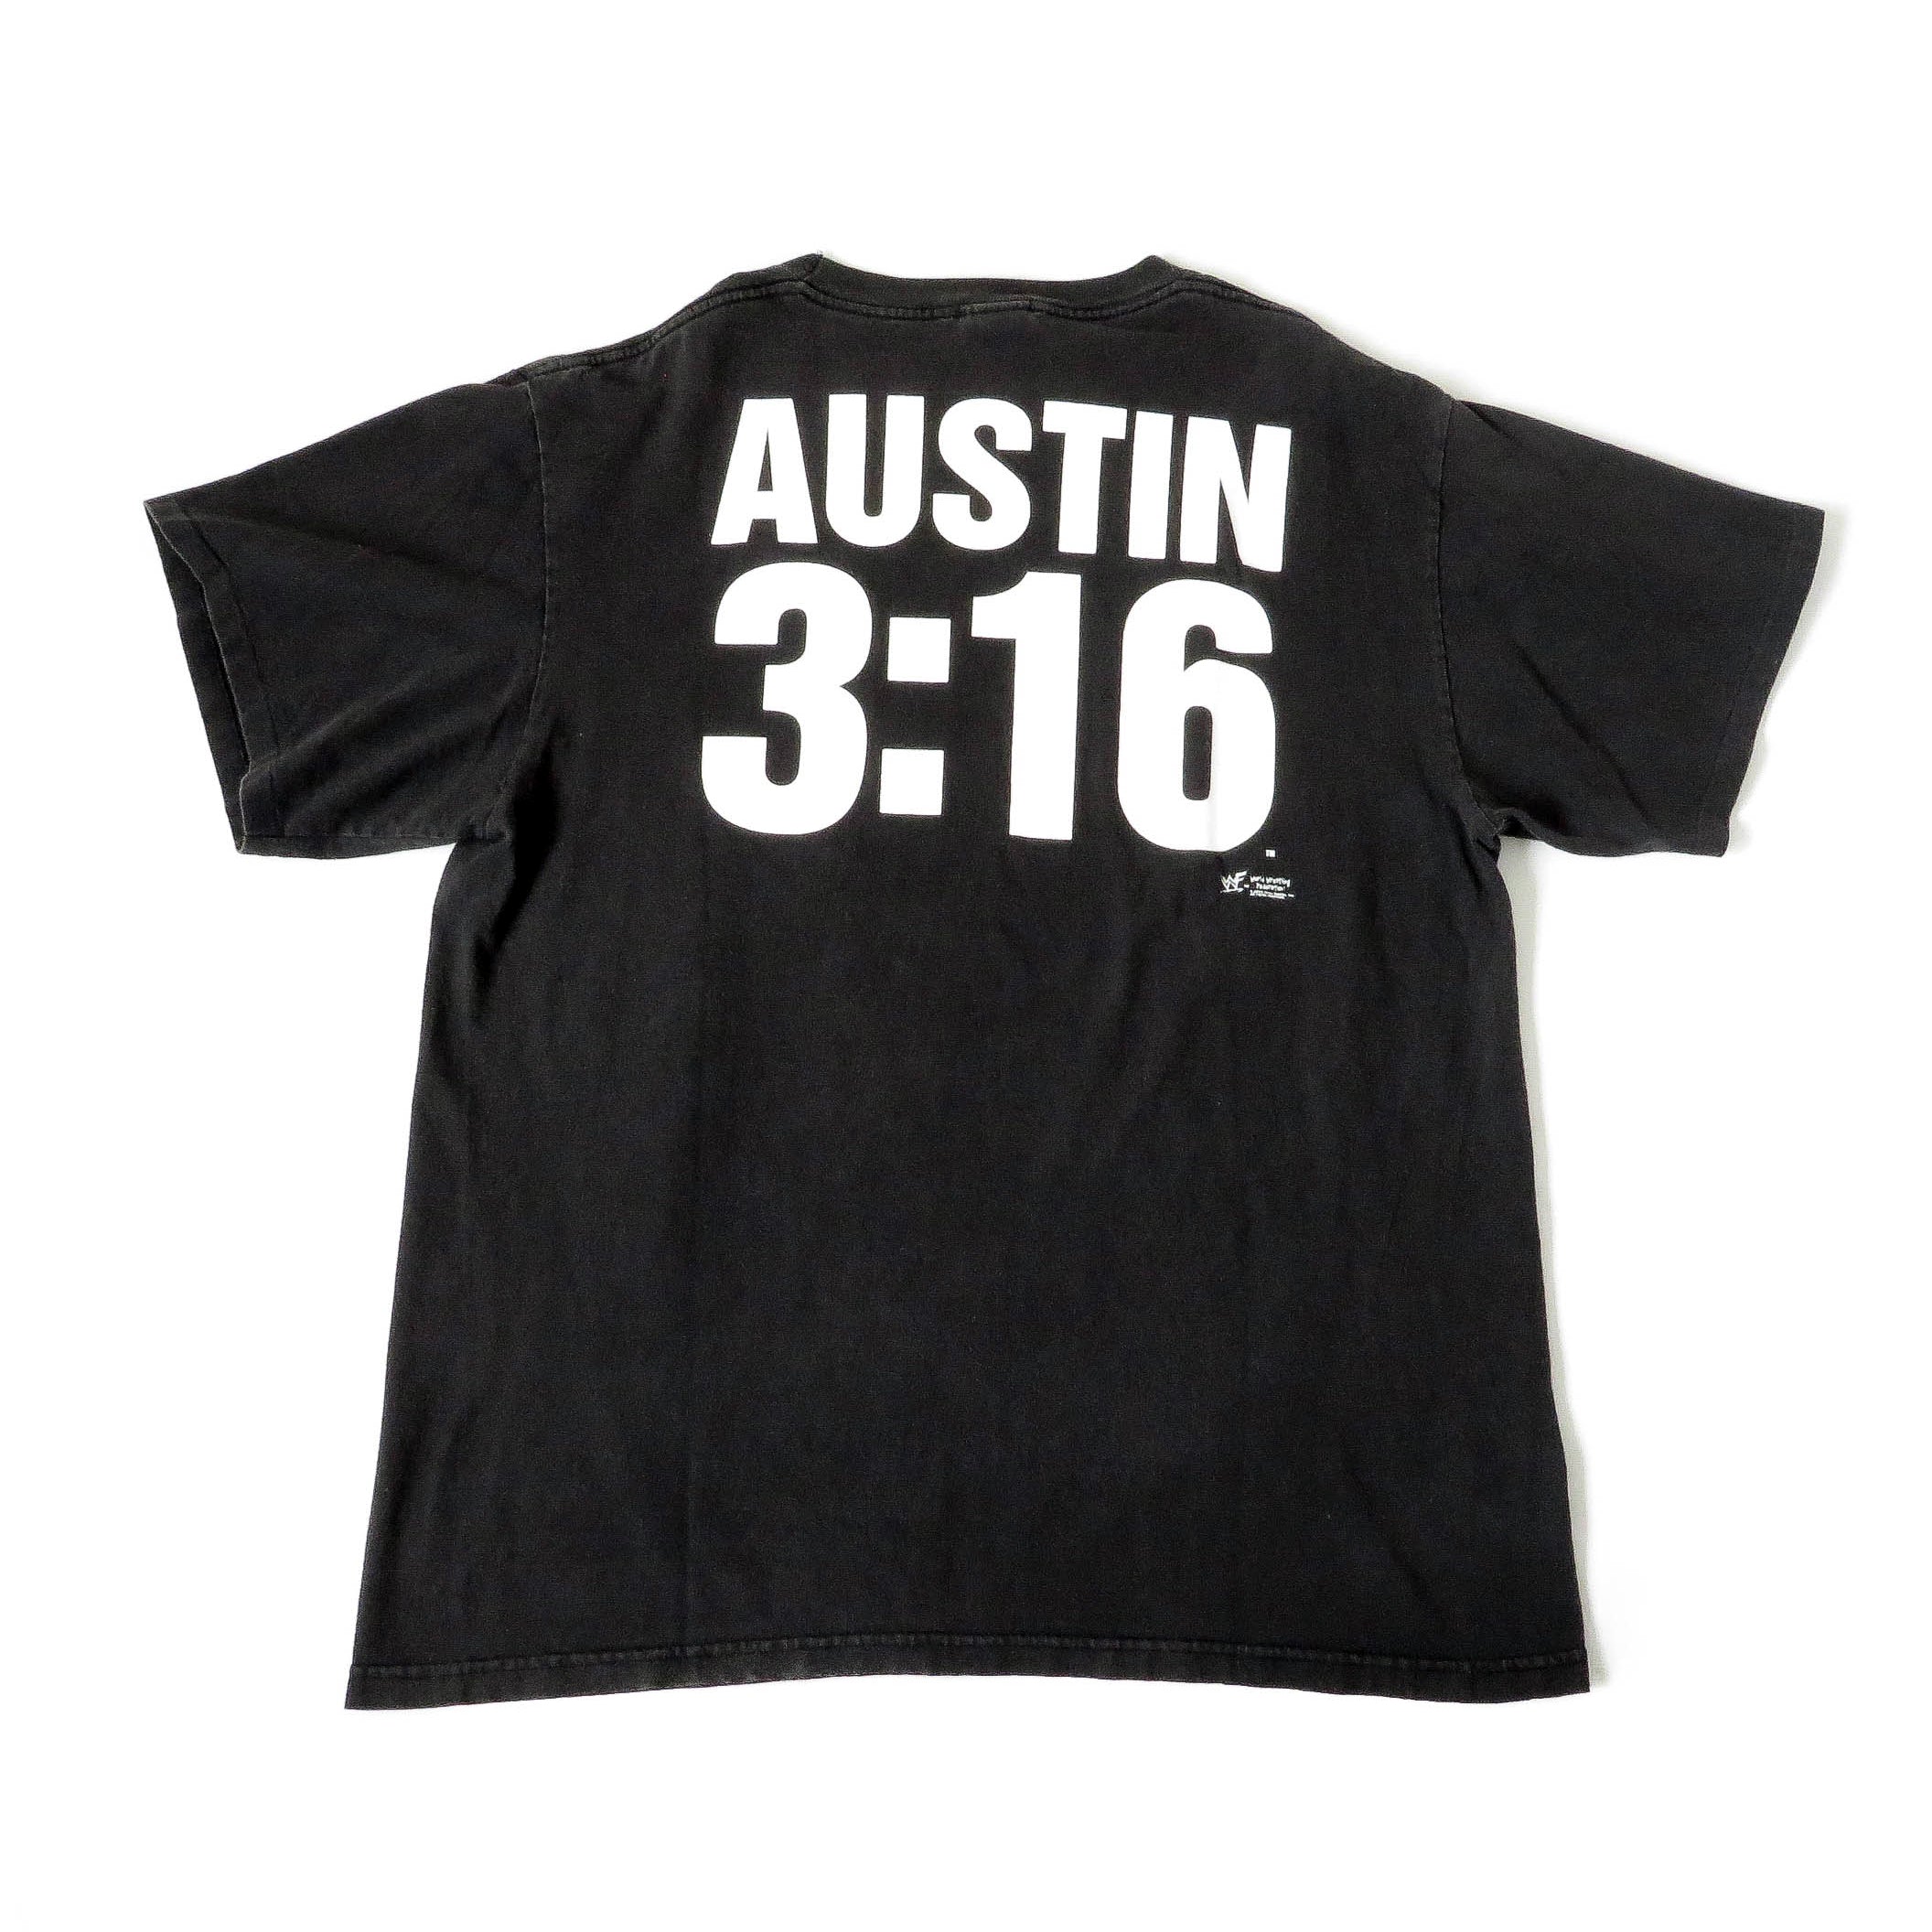 Vintage Stone Cold Austin 3:16 T-Shirt Sz XL